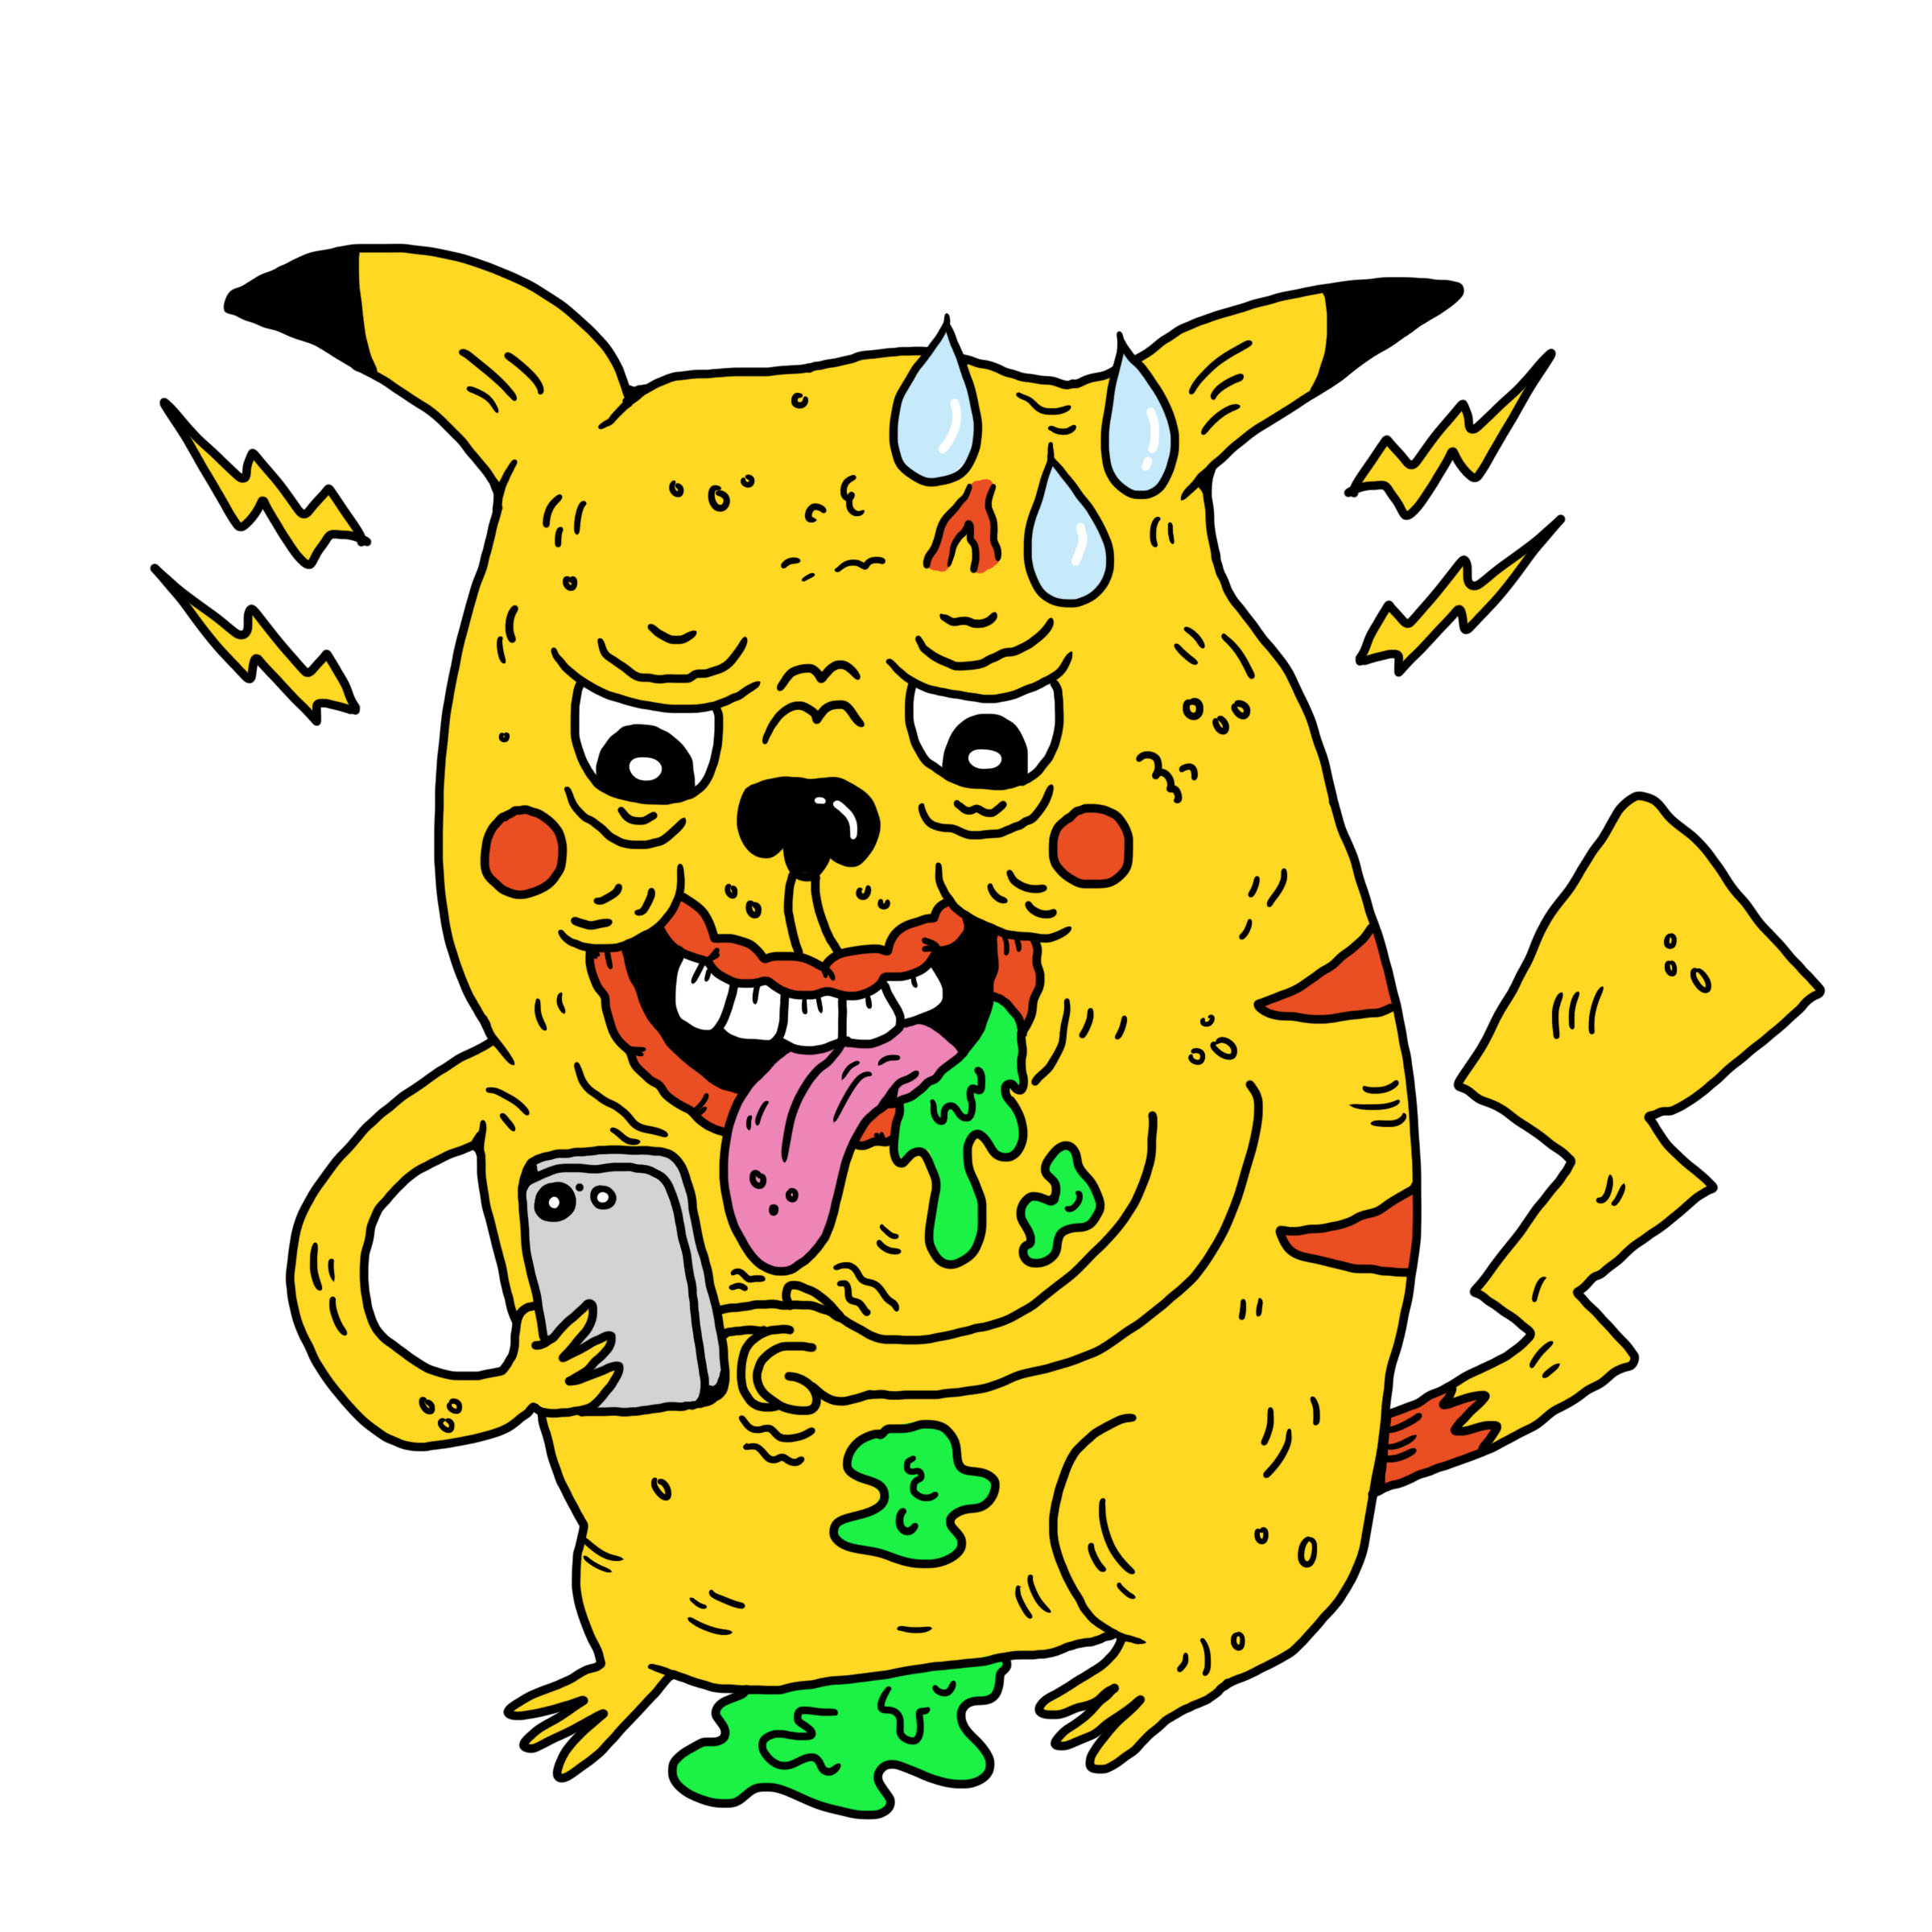 Original Pikachu Illustration